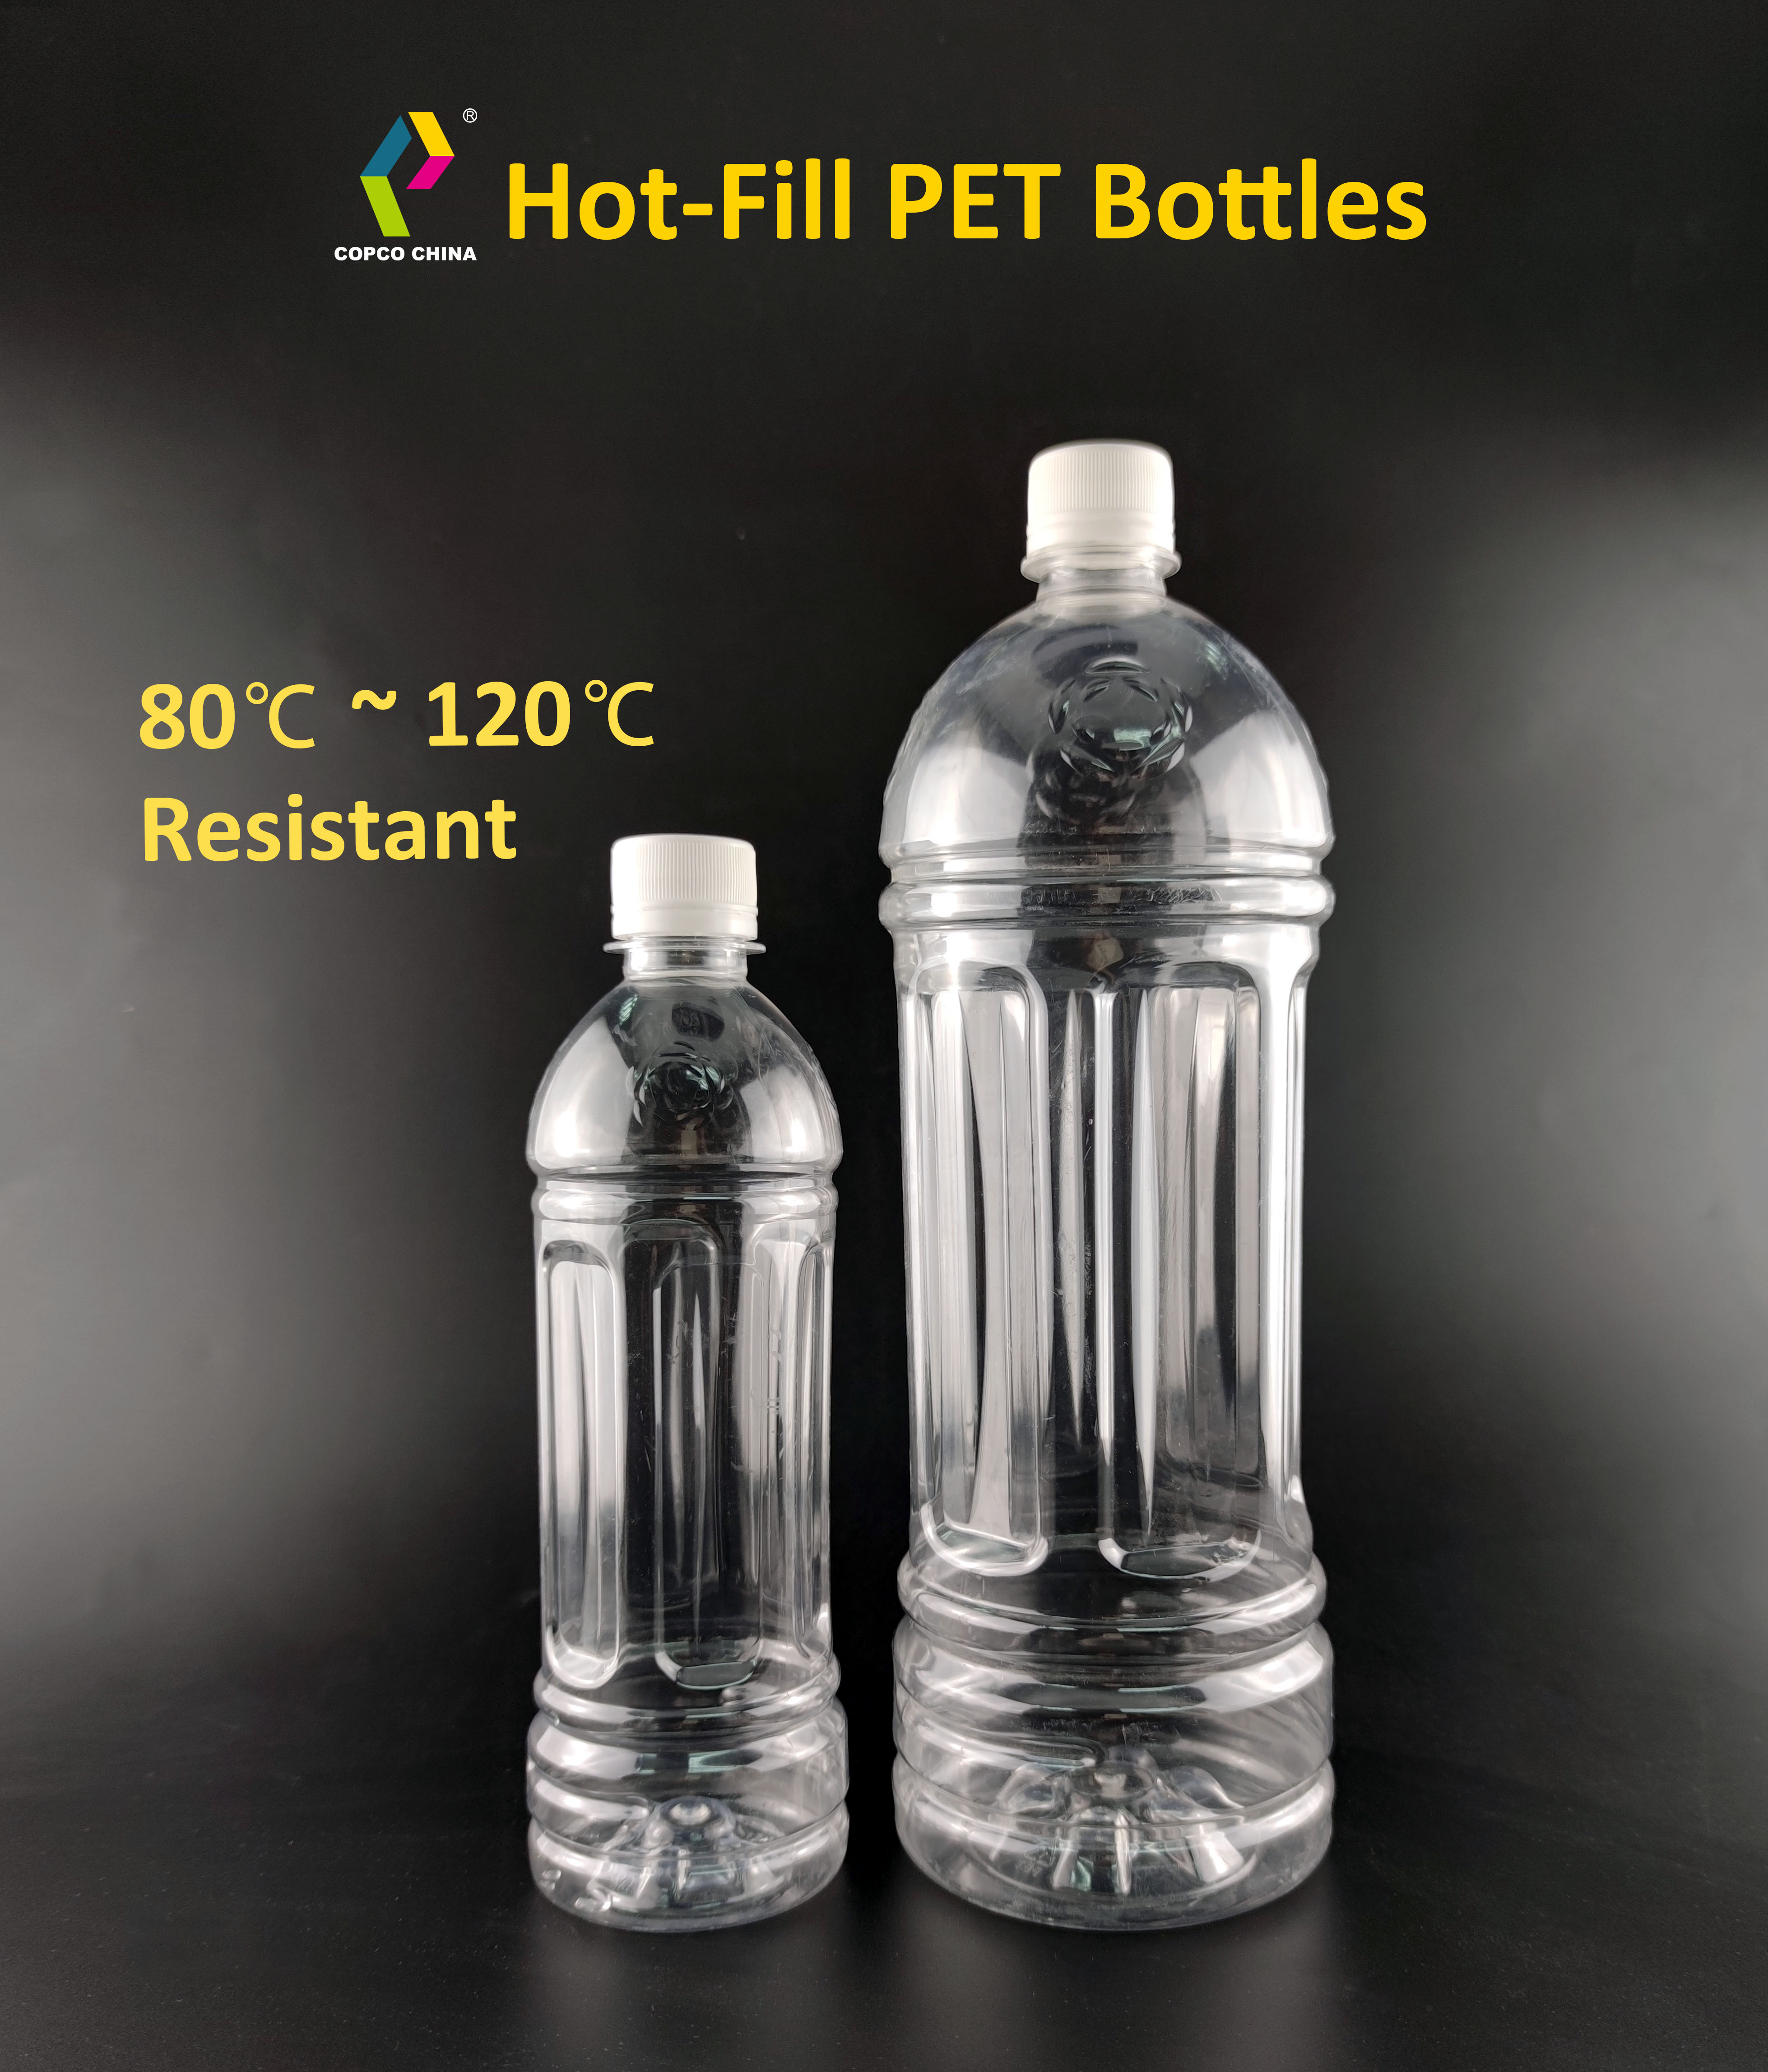 Hot-fill PET bottles.jpg